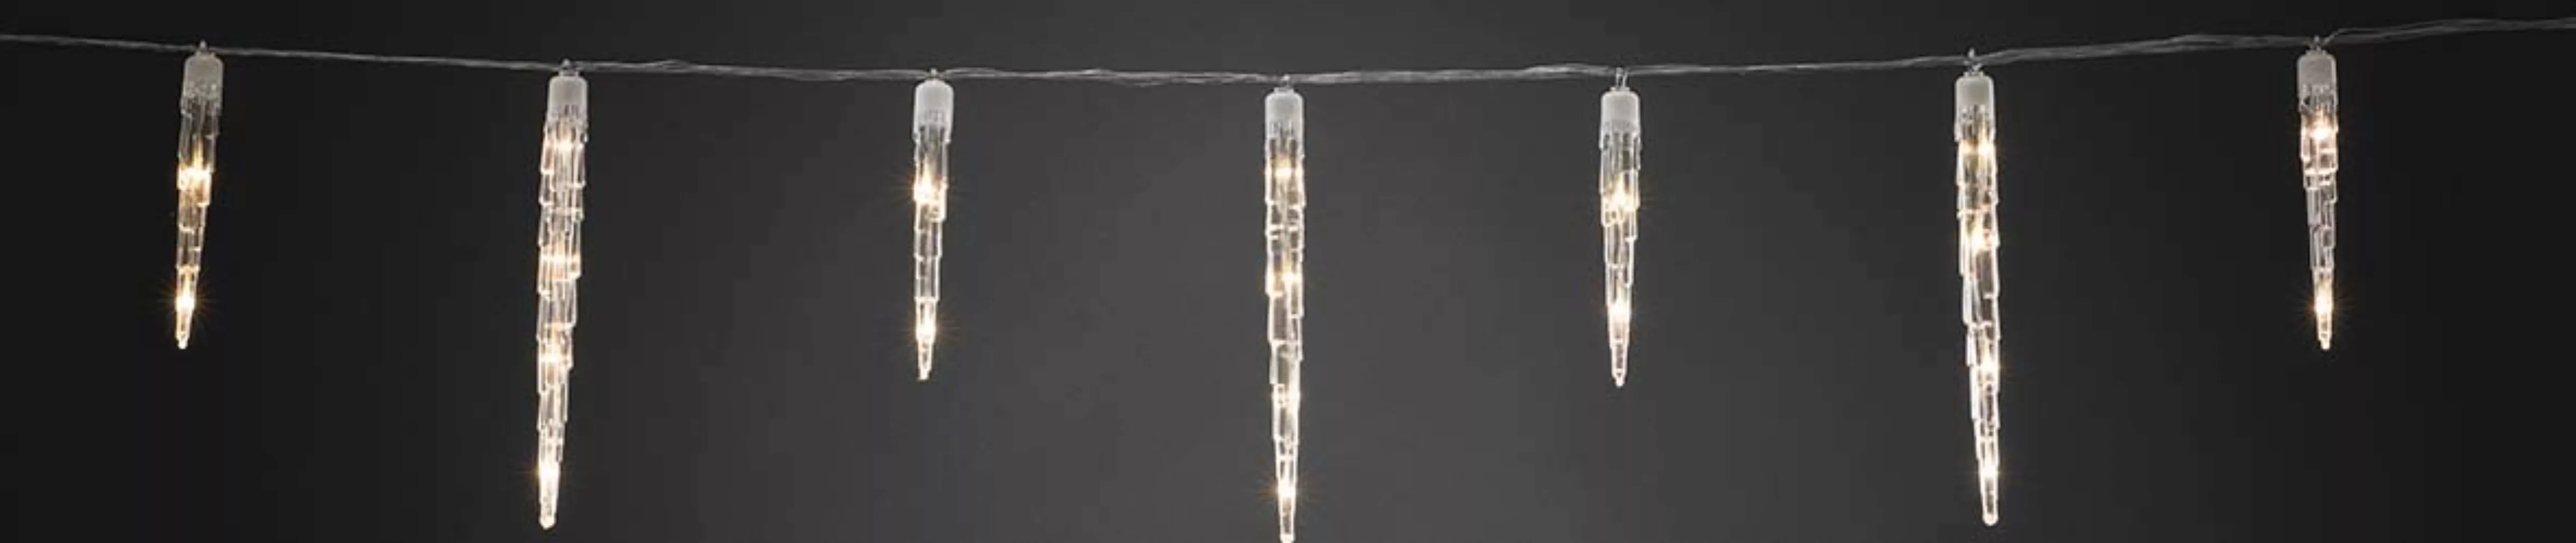 Gnosjö Konstsmide WB LED Eiszapfenvorhang 32Zapfen m.Multif. 2749-103 günstig online kaufen